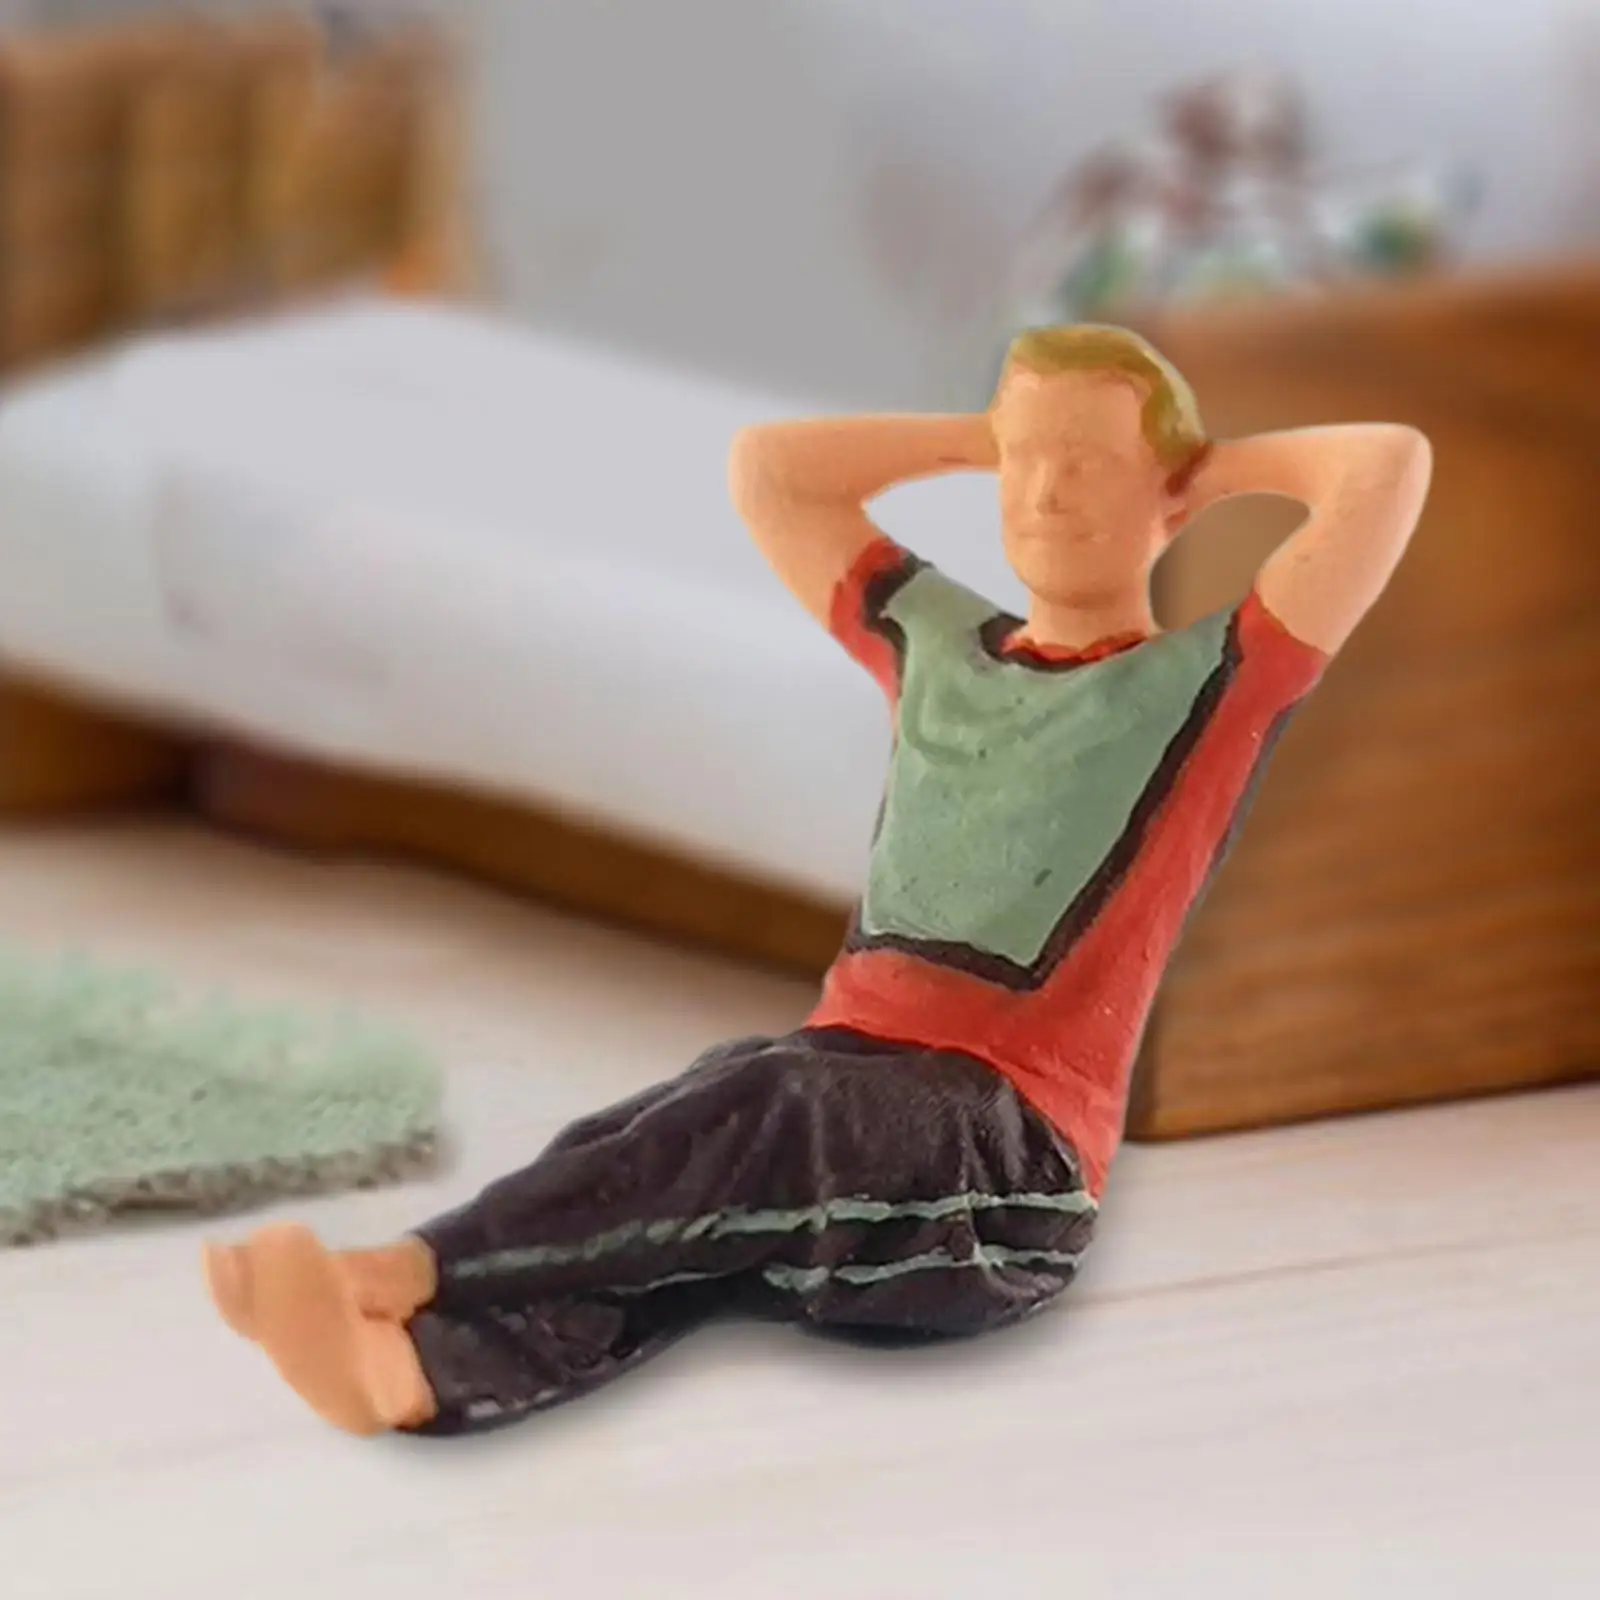 1/64 People Figurines Realistic for Micro Landscape Fairy Garden Model Train